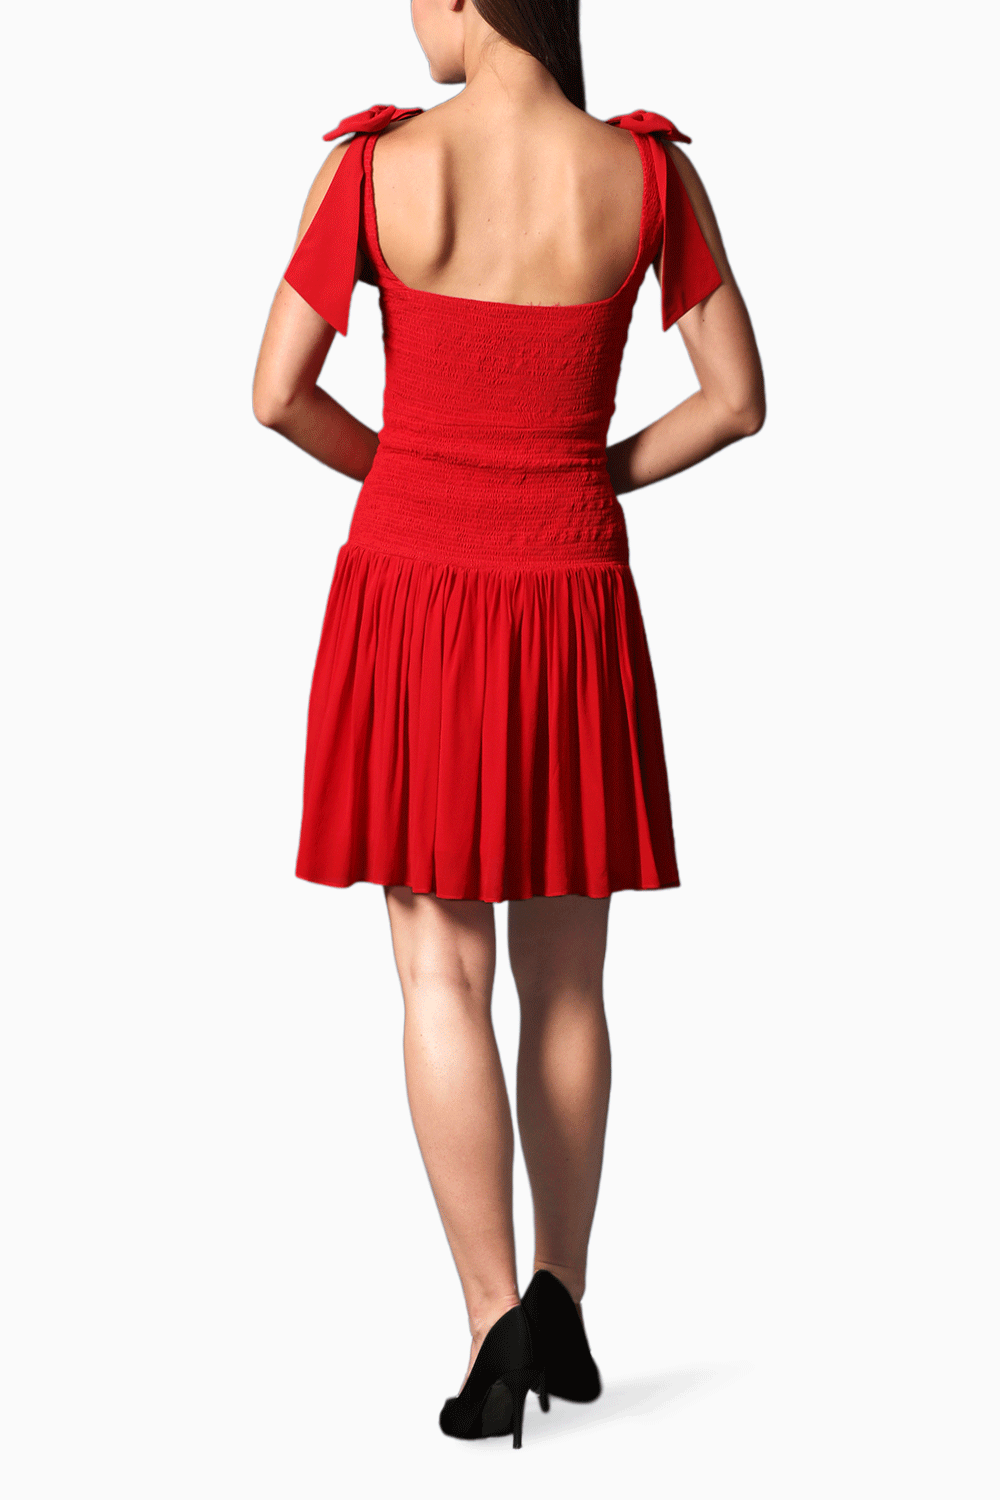 Red Square Neckline Smocking Dress